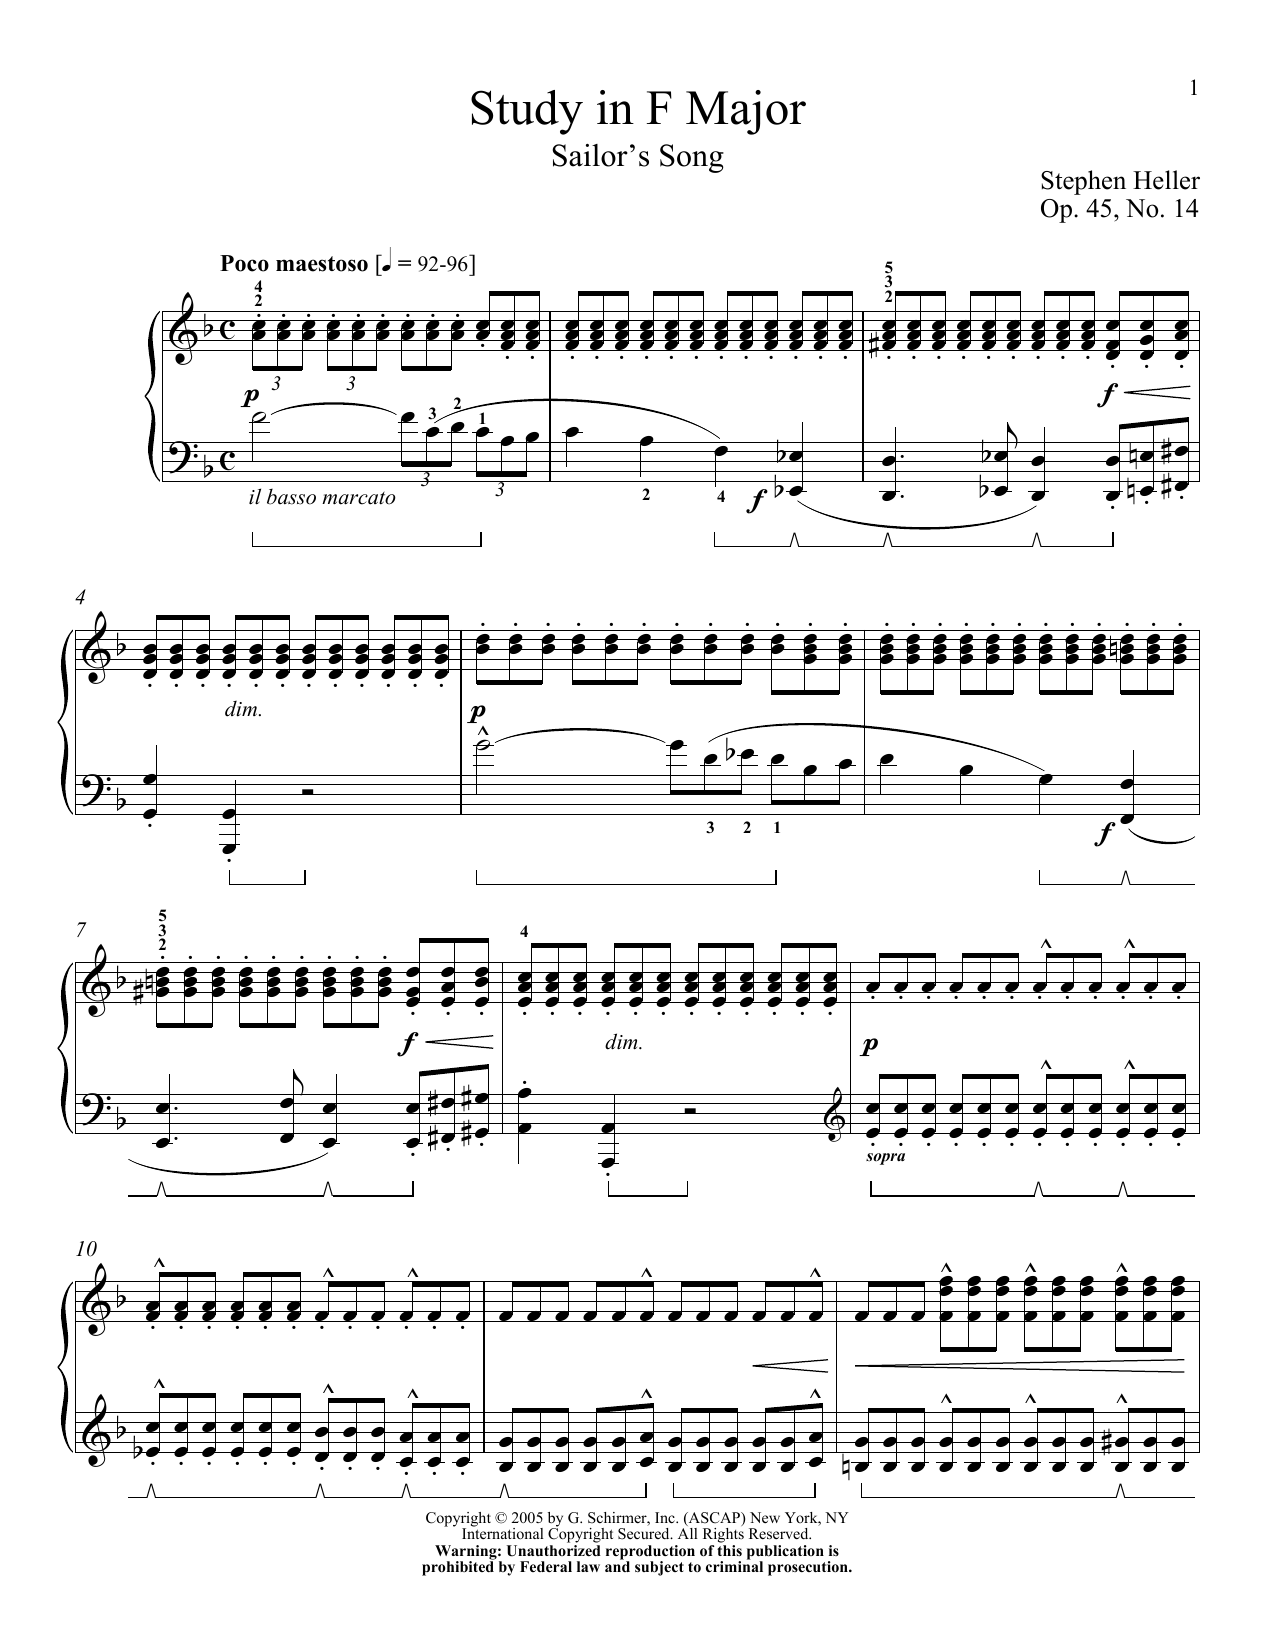 Download Stephen Heller Sailor's Song, Op. 45, No. 14 Sheet Music